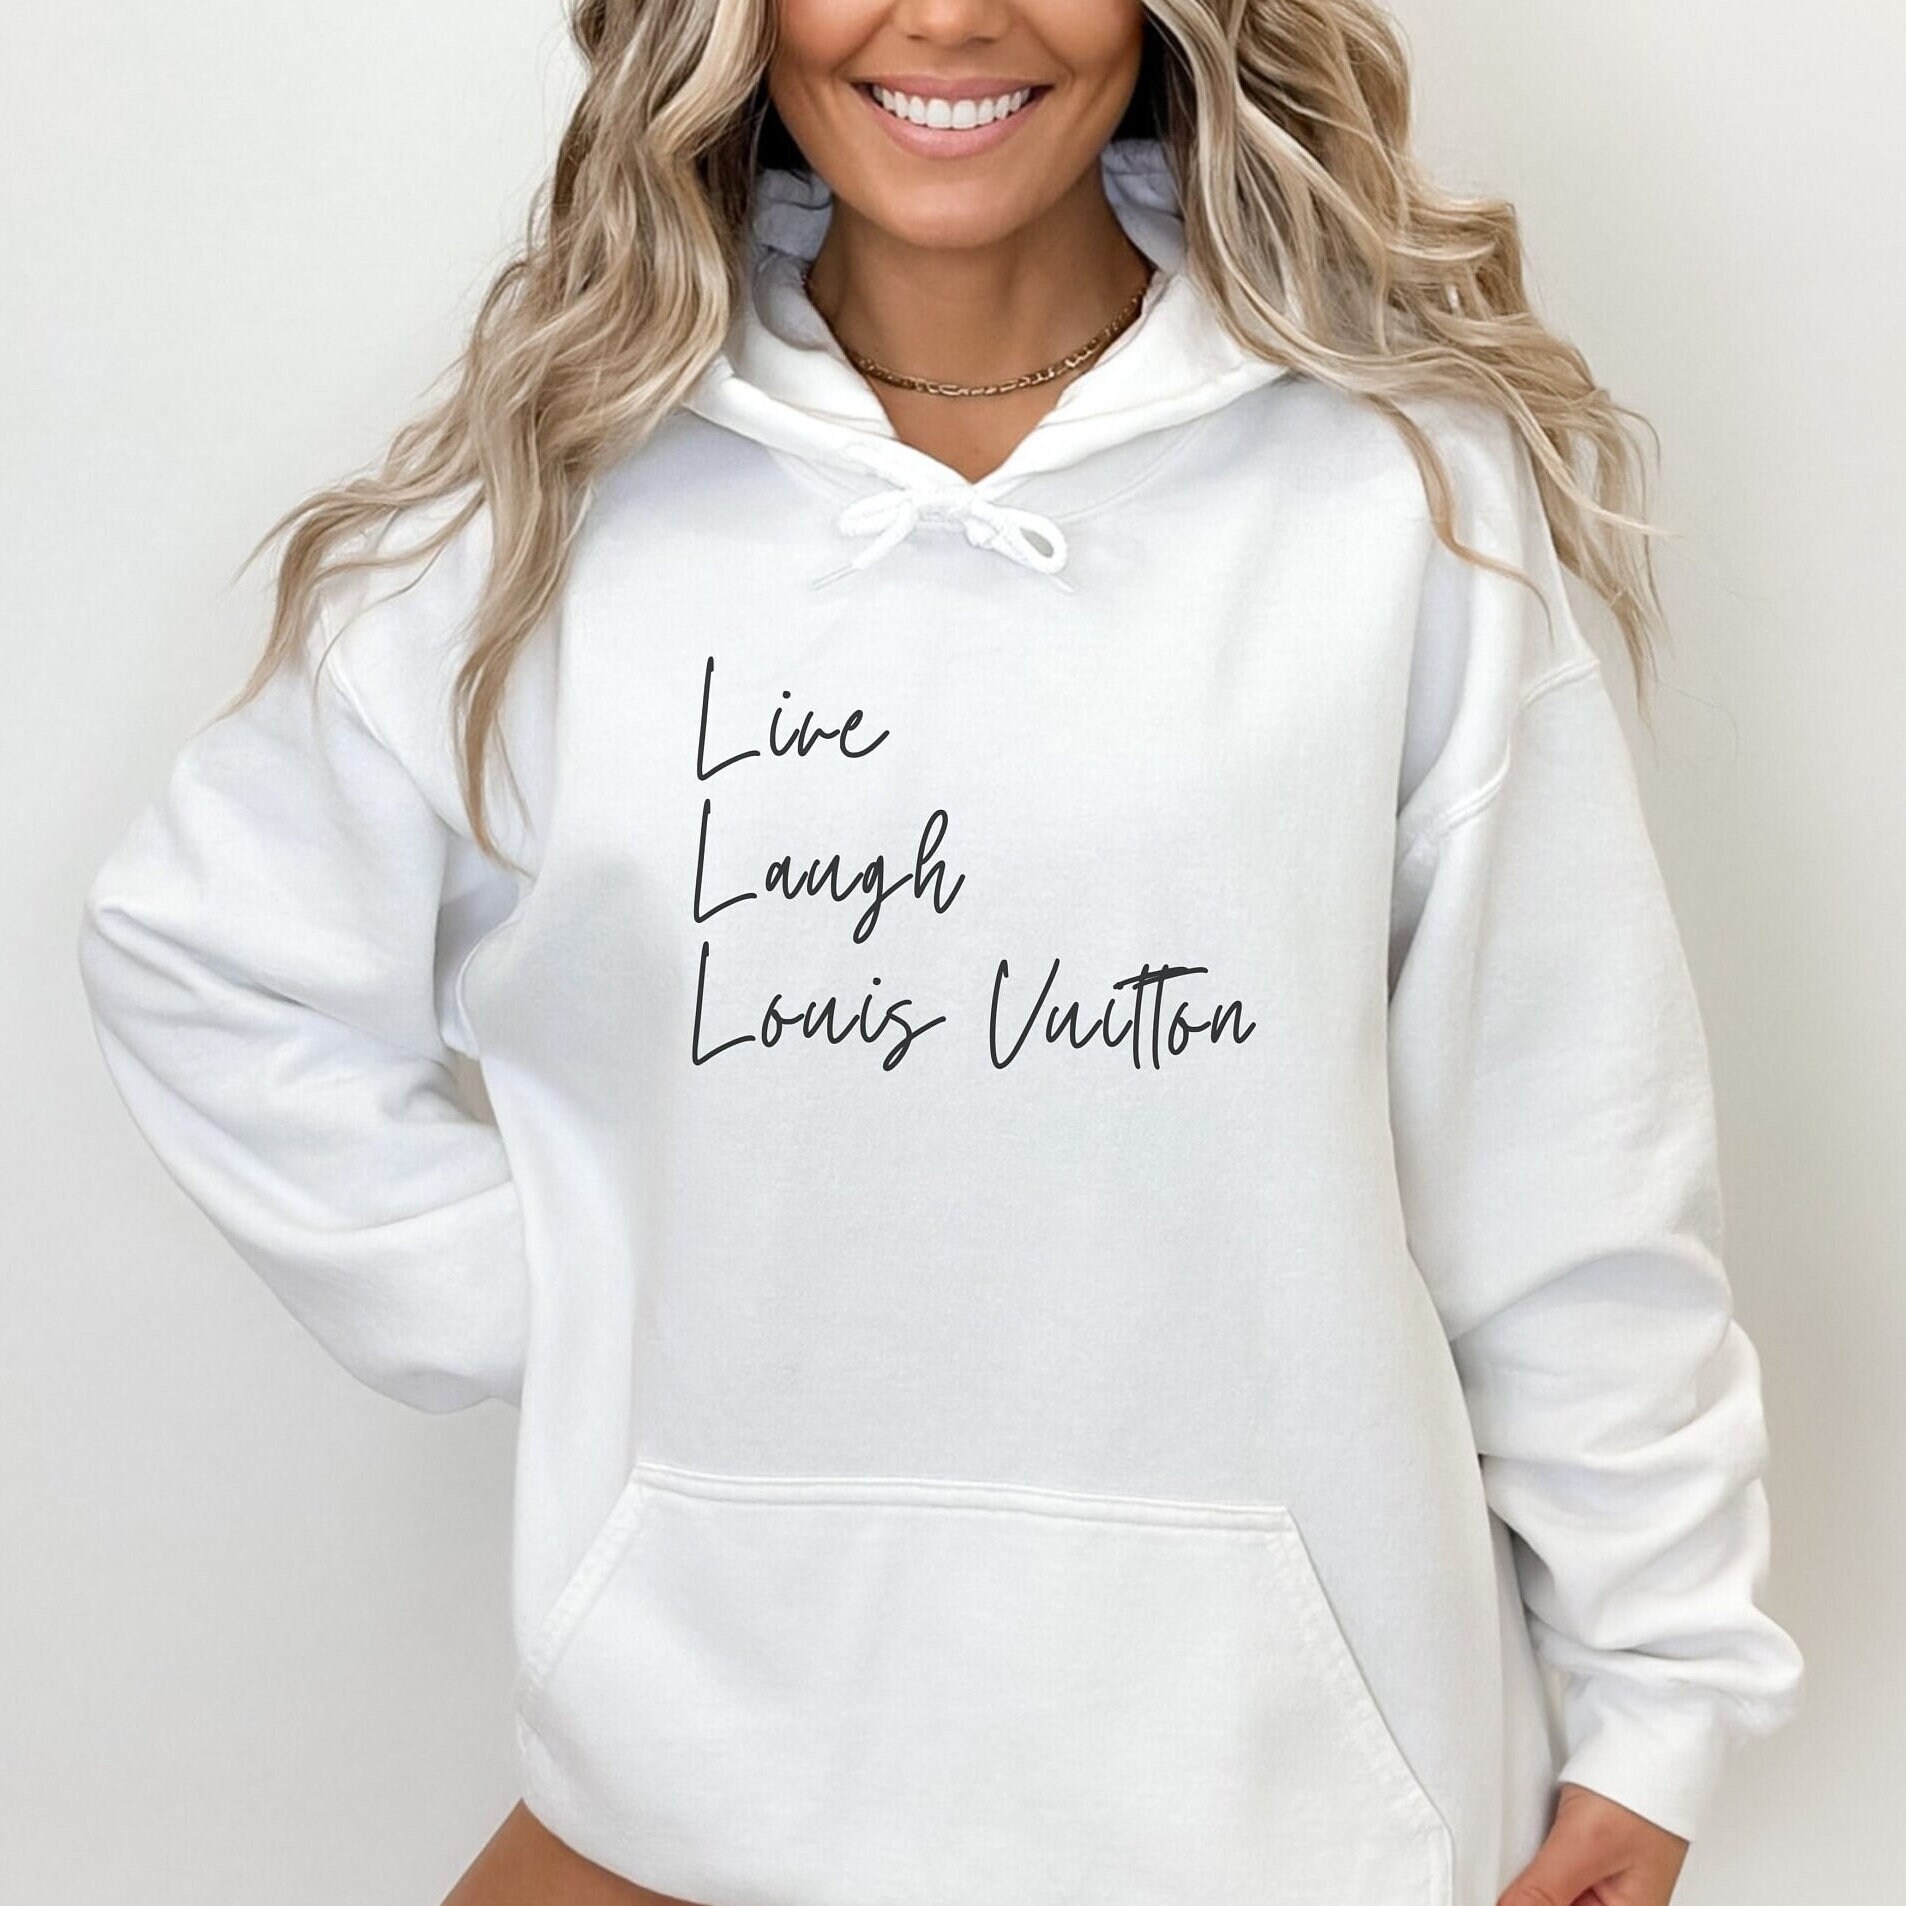 Louis Vuitton Wool Beige LV Logo Turtleneck Sweater Jumper